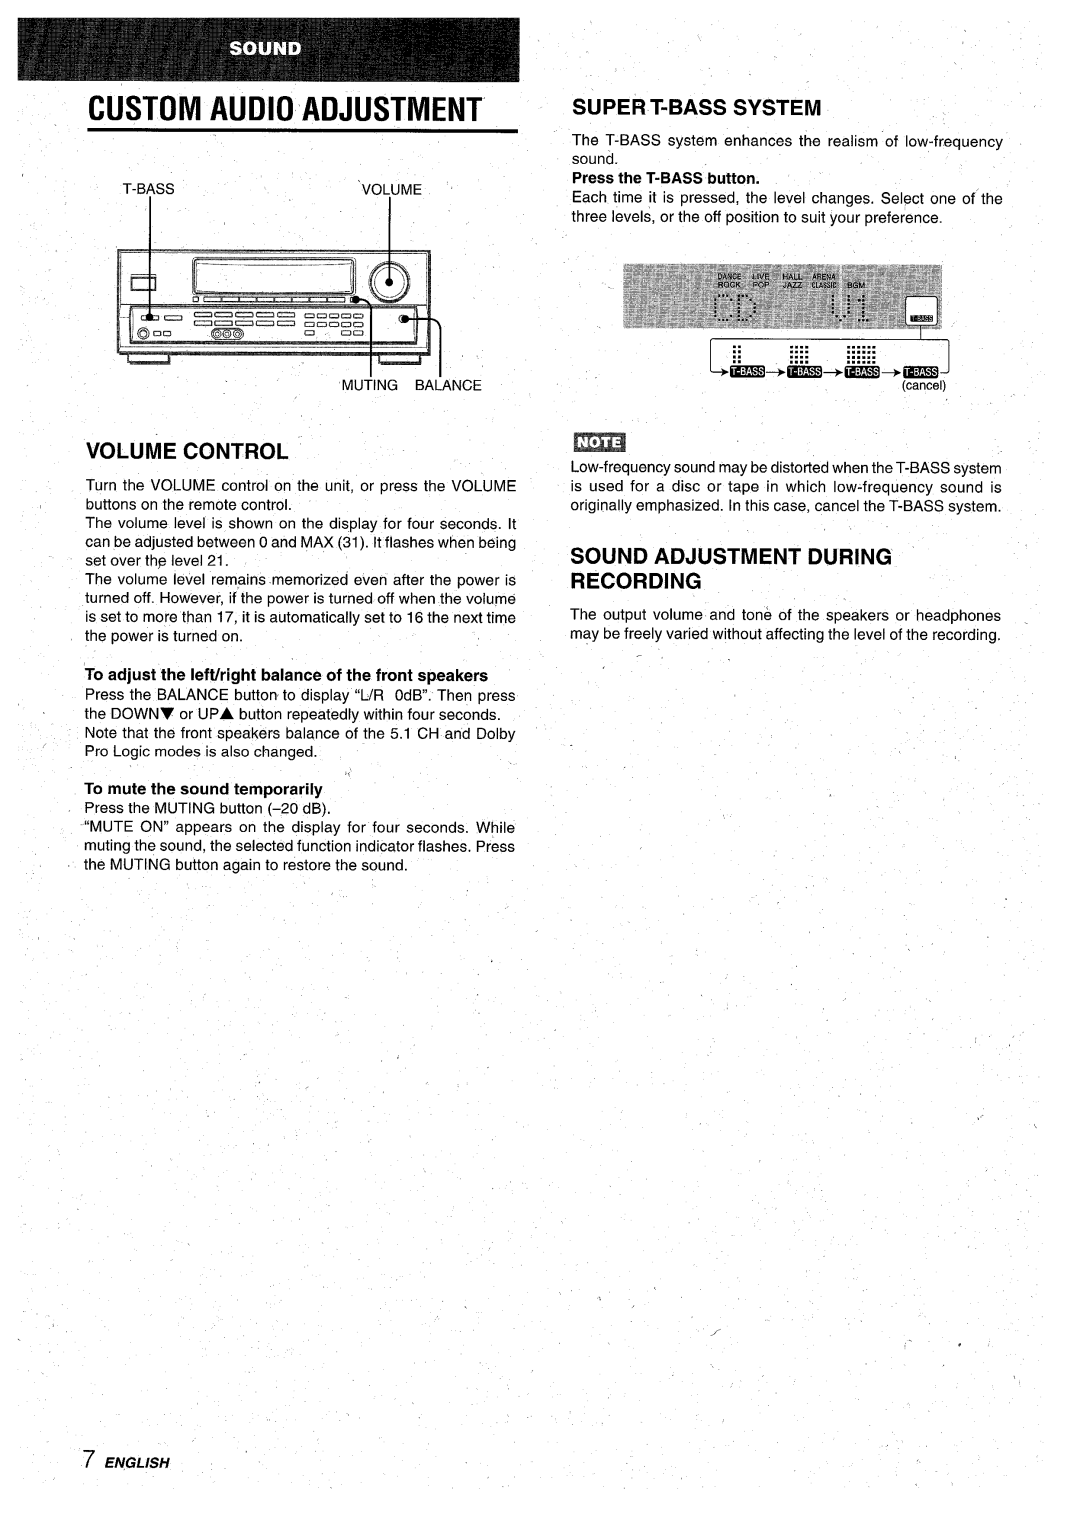 Aiwa AV-D30 manual Custom Audio Adjustment”, Super T-Bass System, Volume Control, Sound Adjustment During Recording 